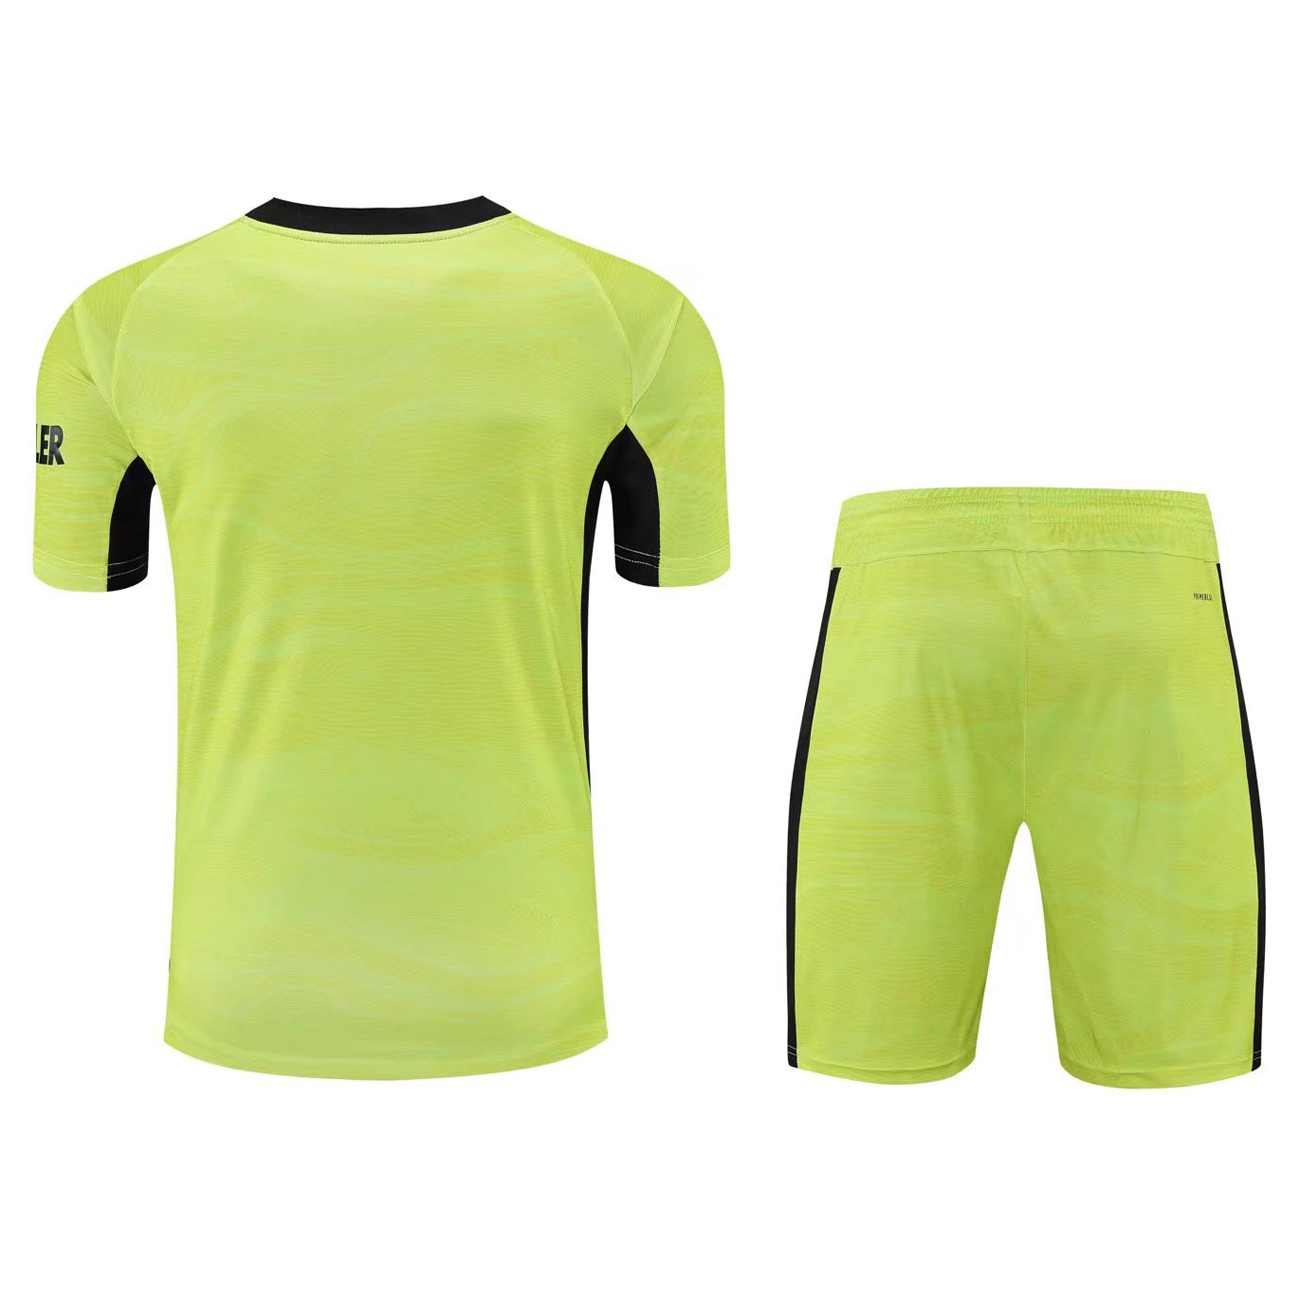 Manchester United Soccer Jersey + Shorts Replica Goalkeeper Green Mens 2021/22